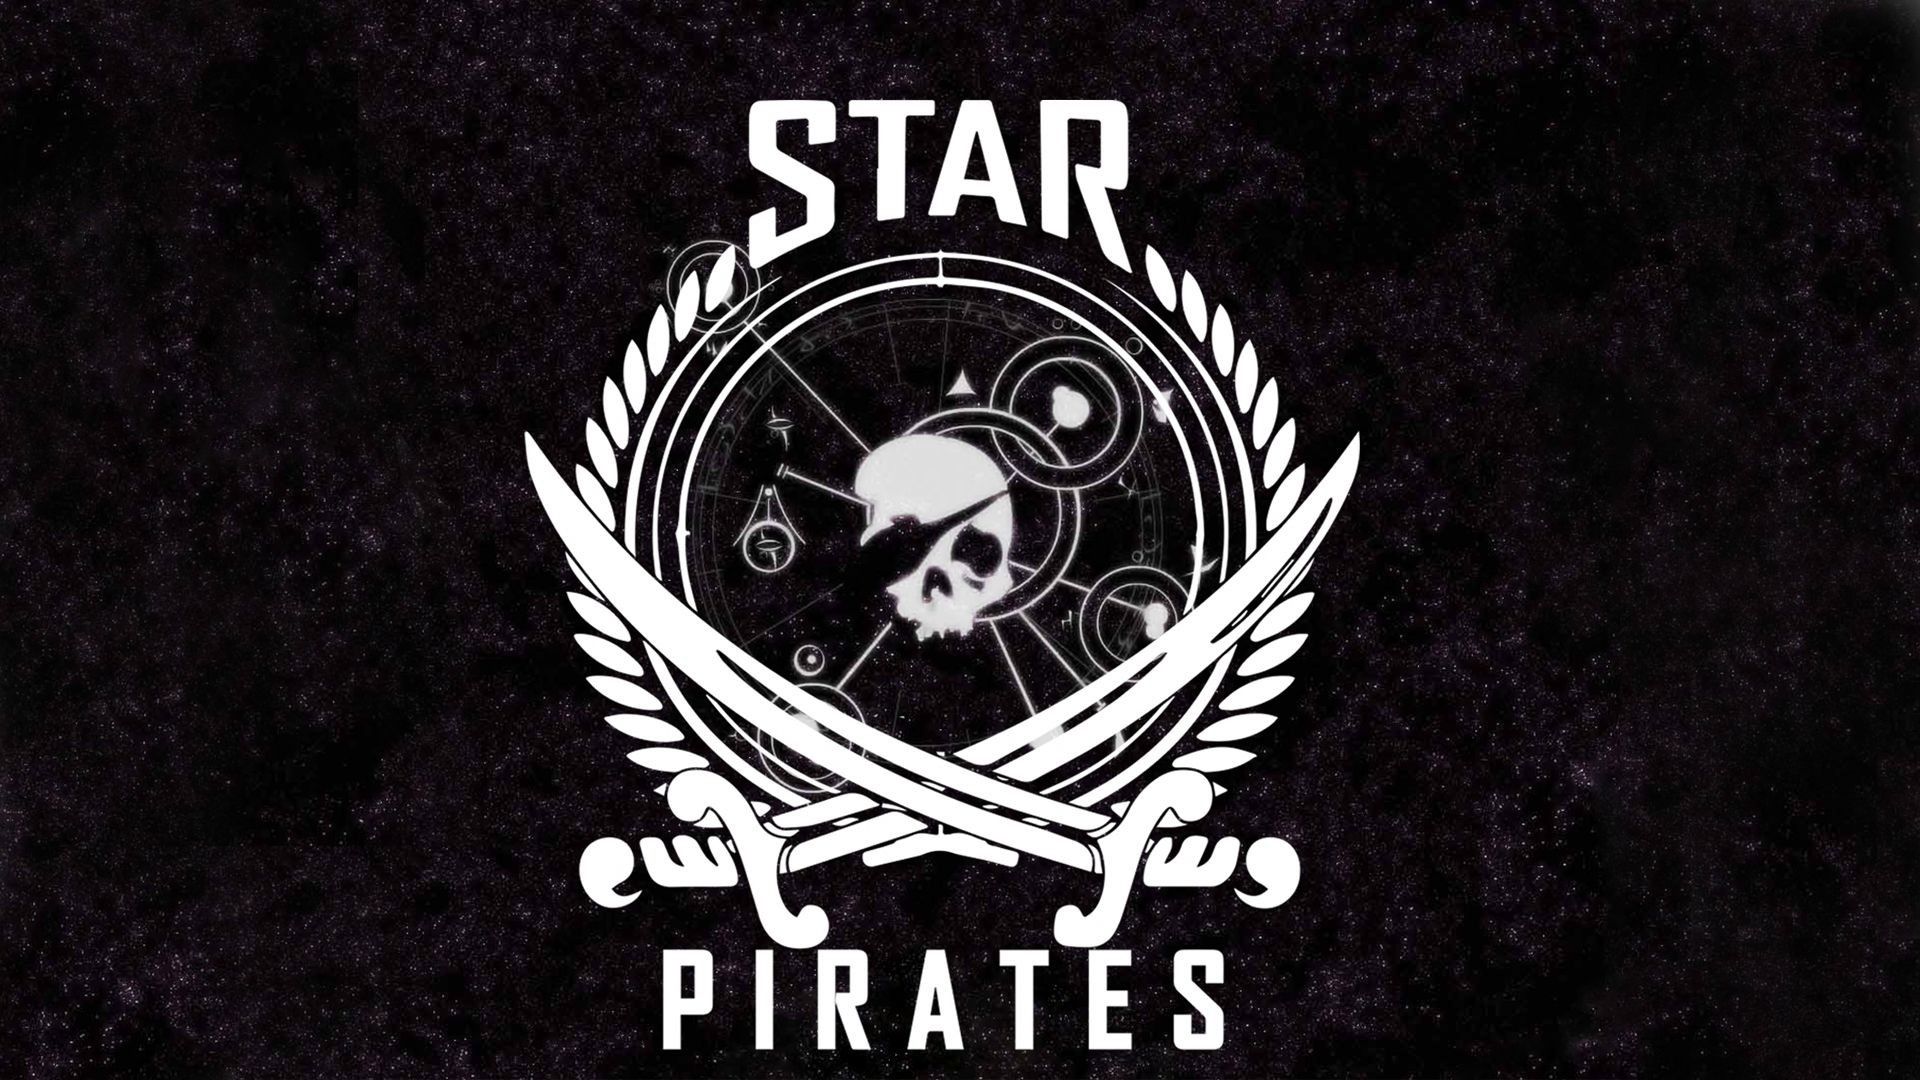 Cool Space Pirate Logo